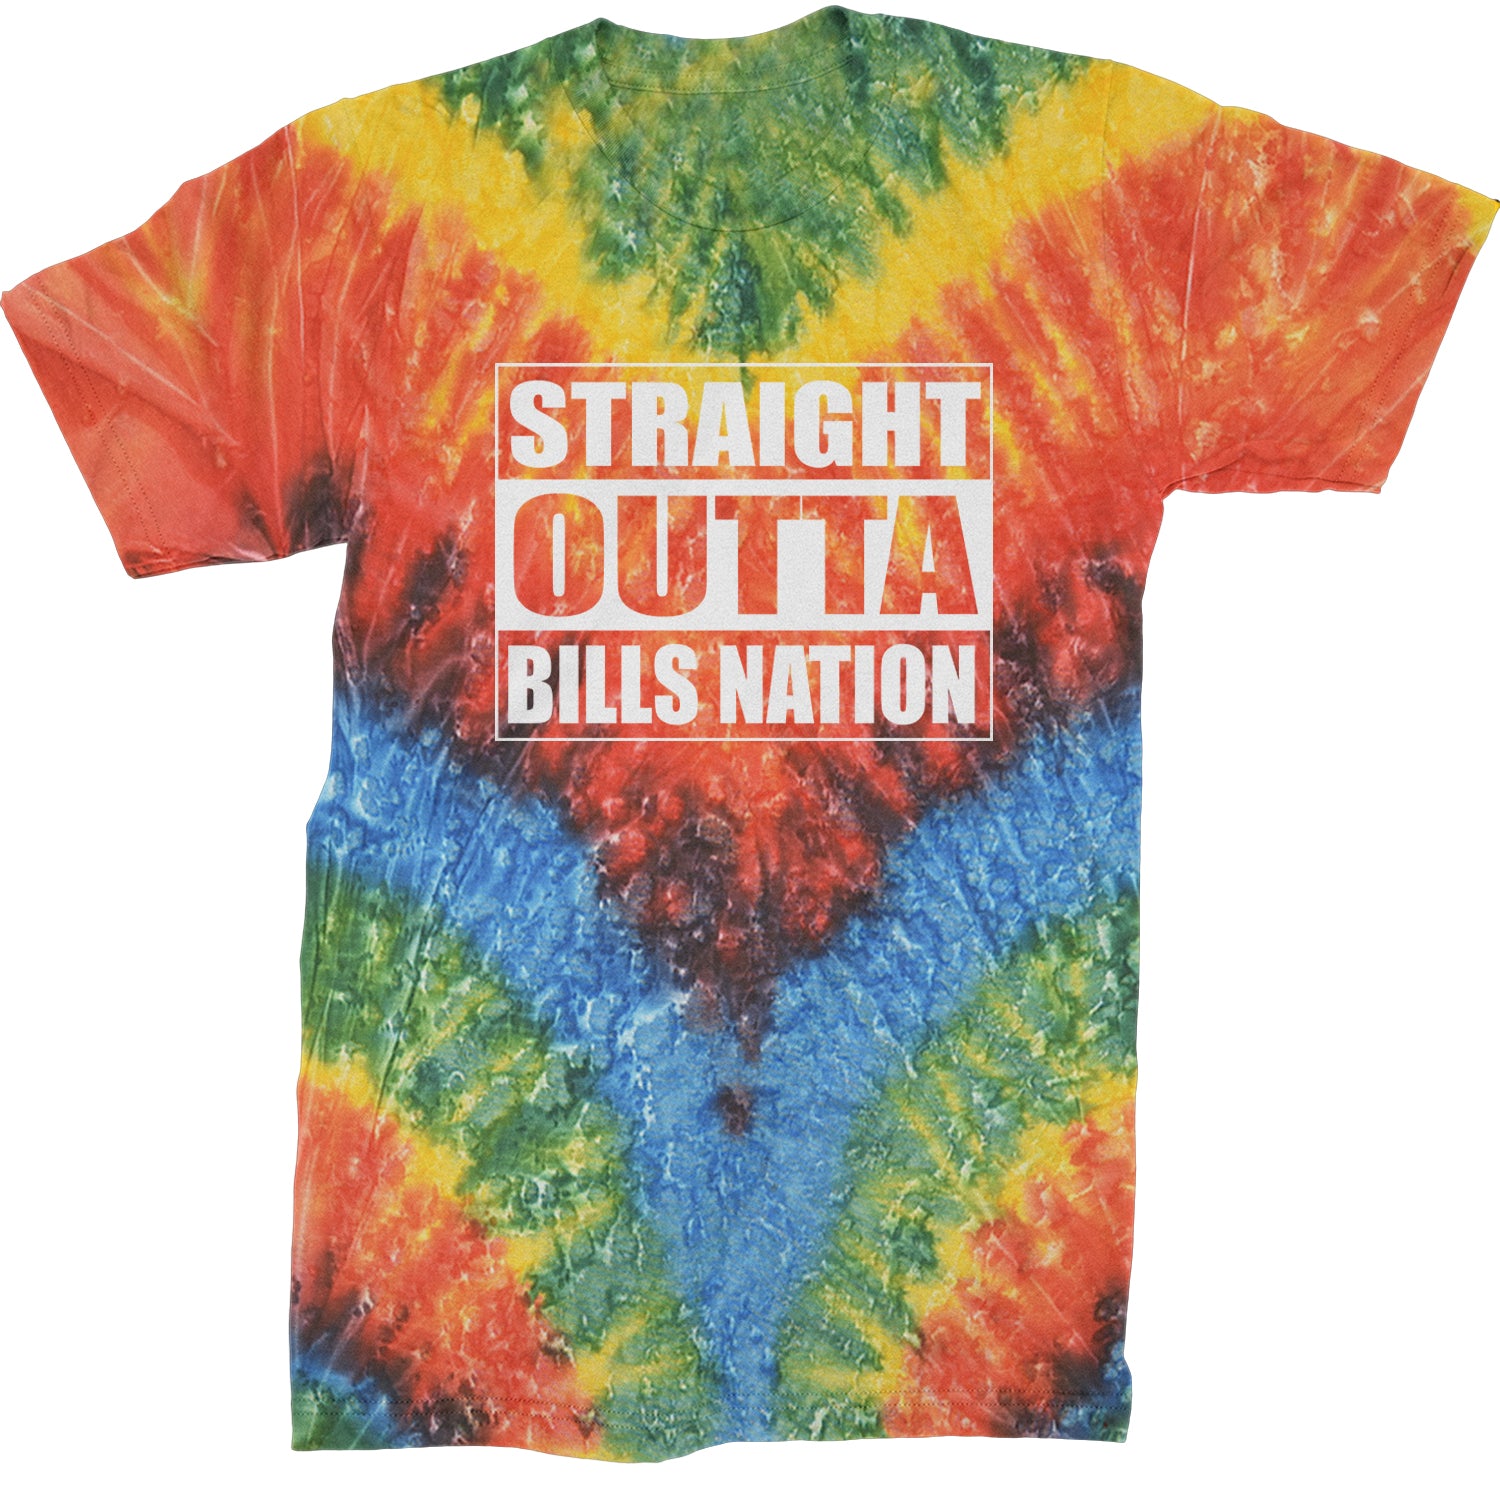 Straight Outta Bills Nation  Mens T-shirt Tie-Dye Woodstock